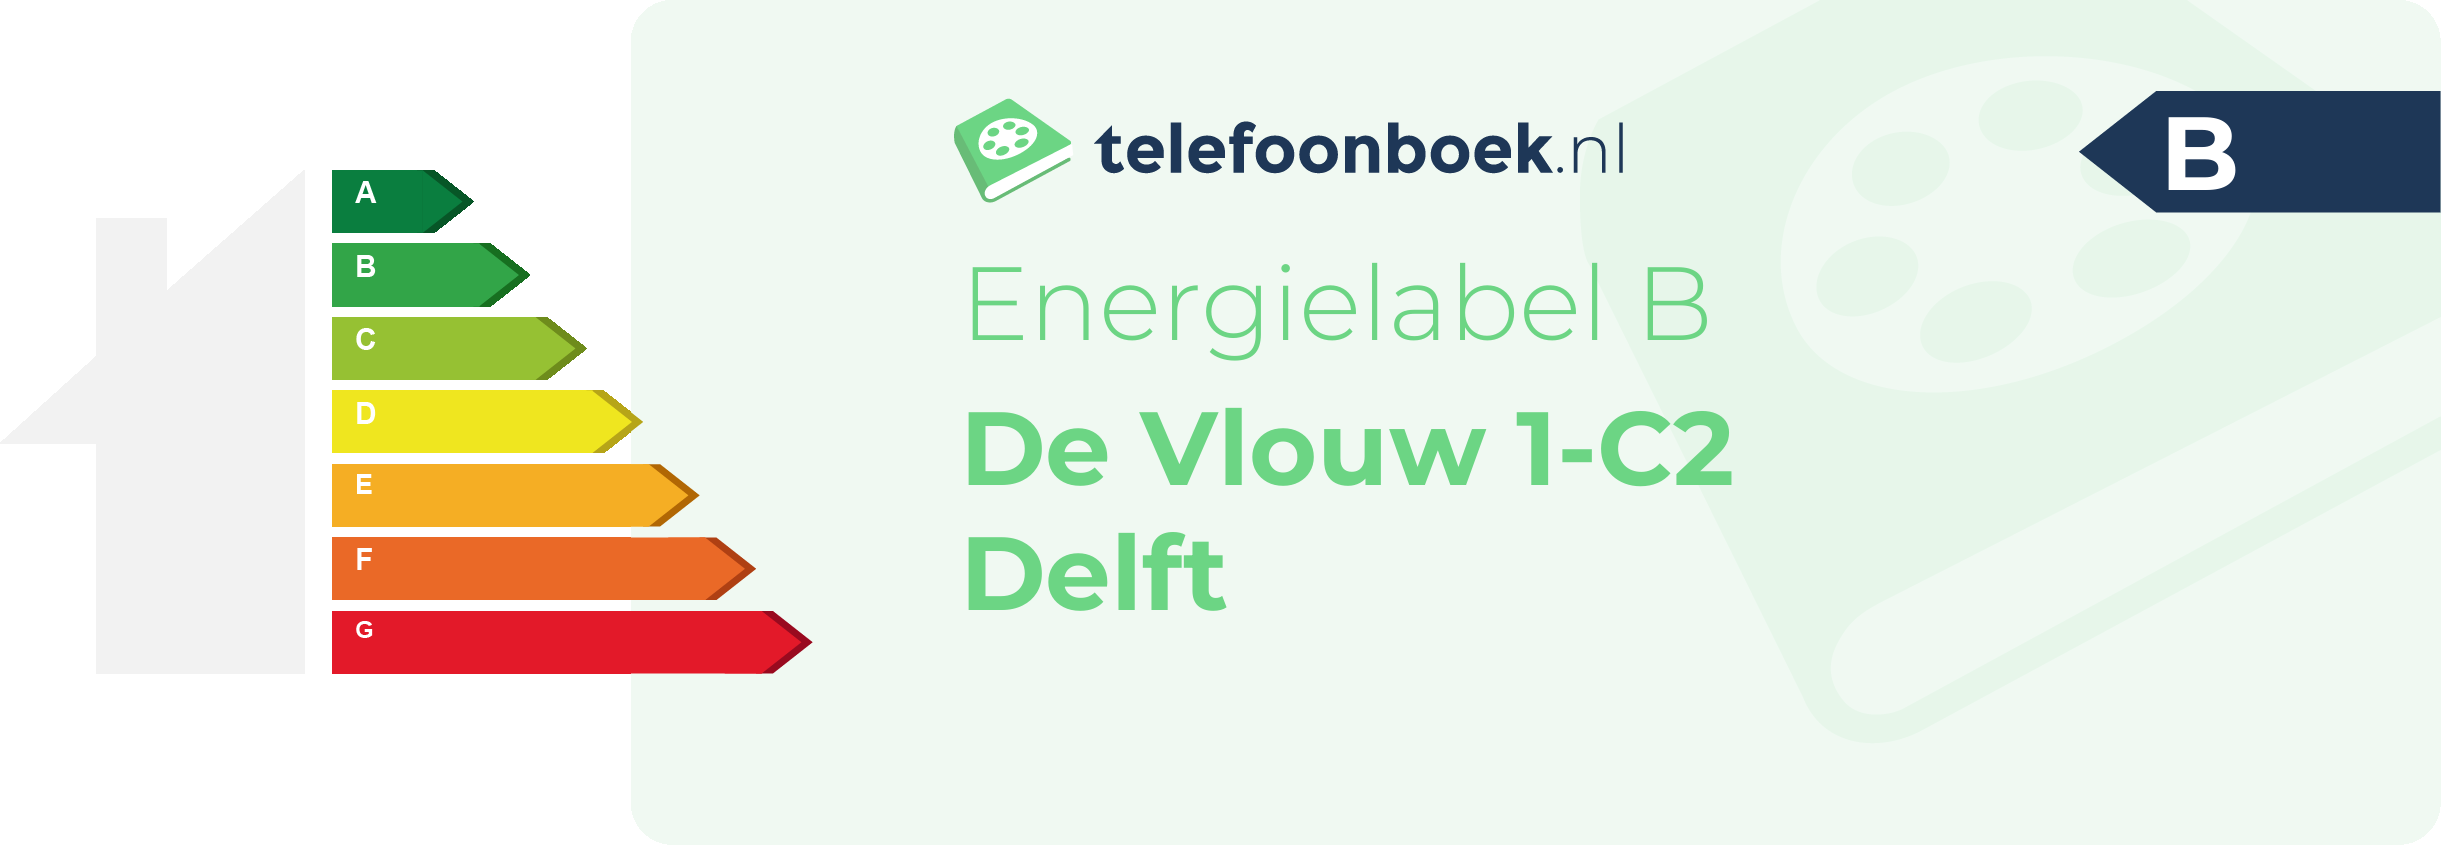 Energielabel De Vlouw 1-C2 Delft